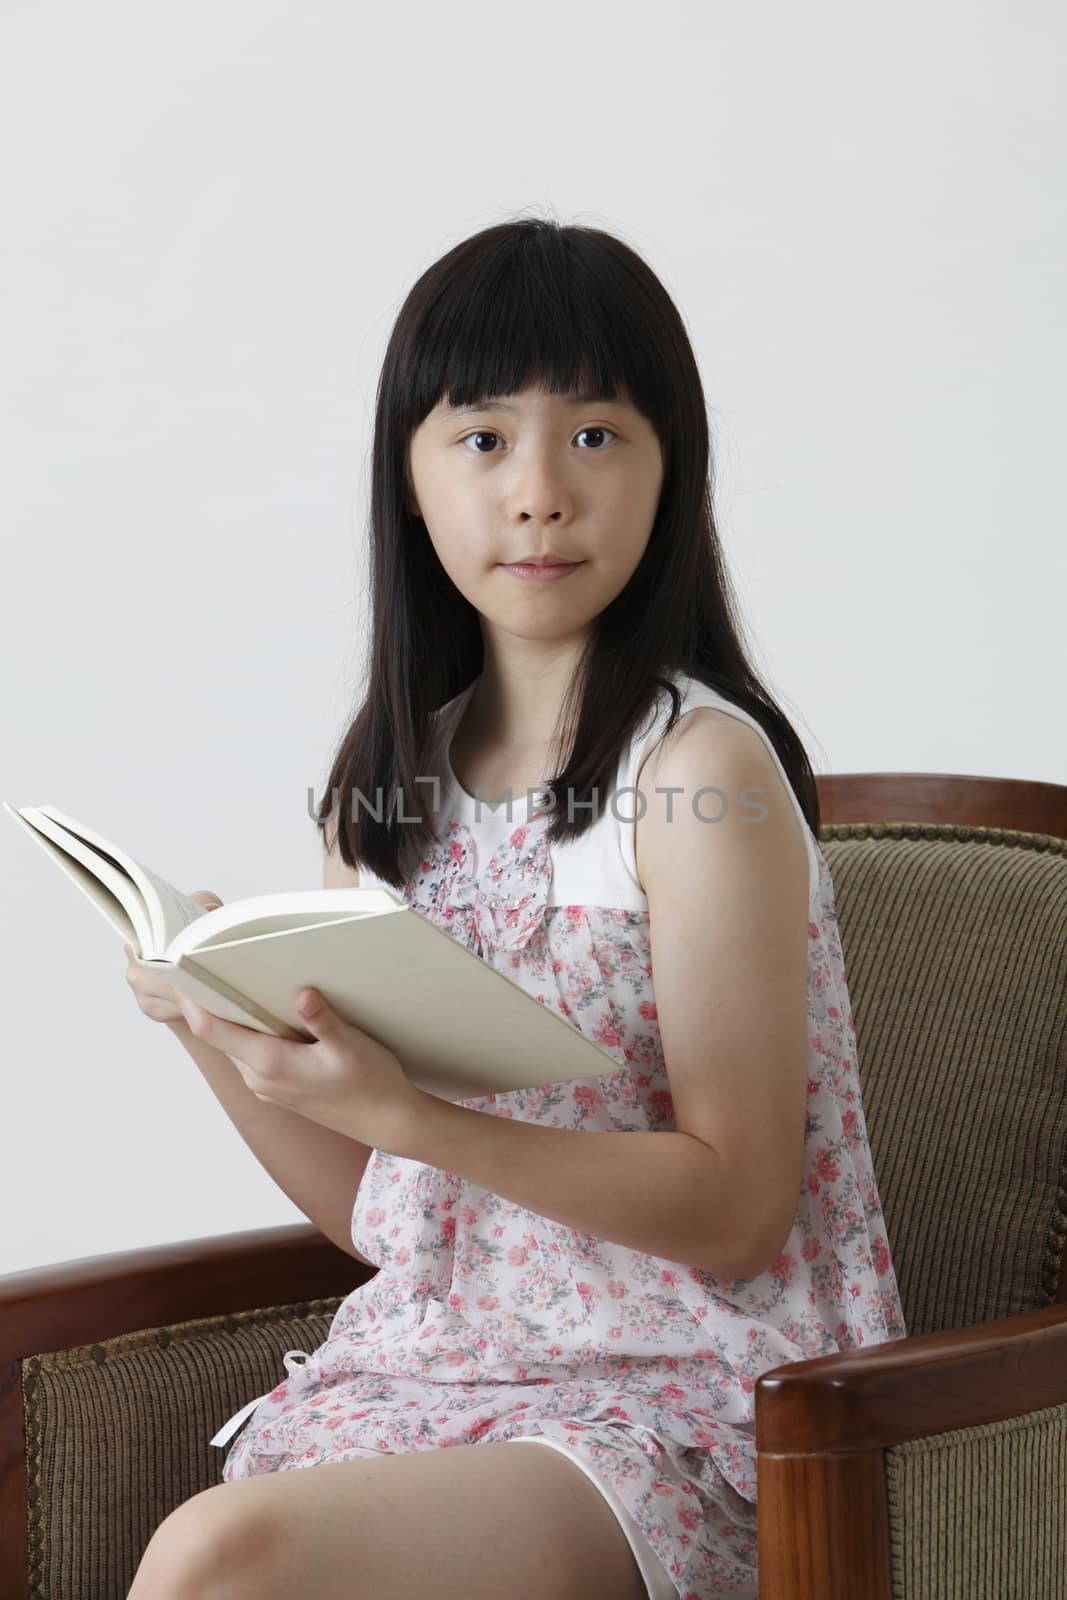 girl reading book by eskaylim